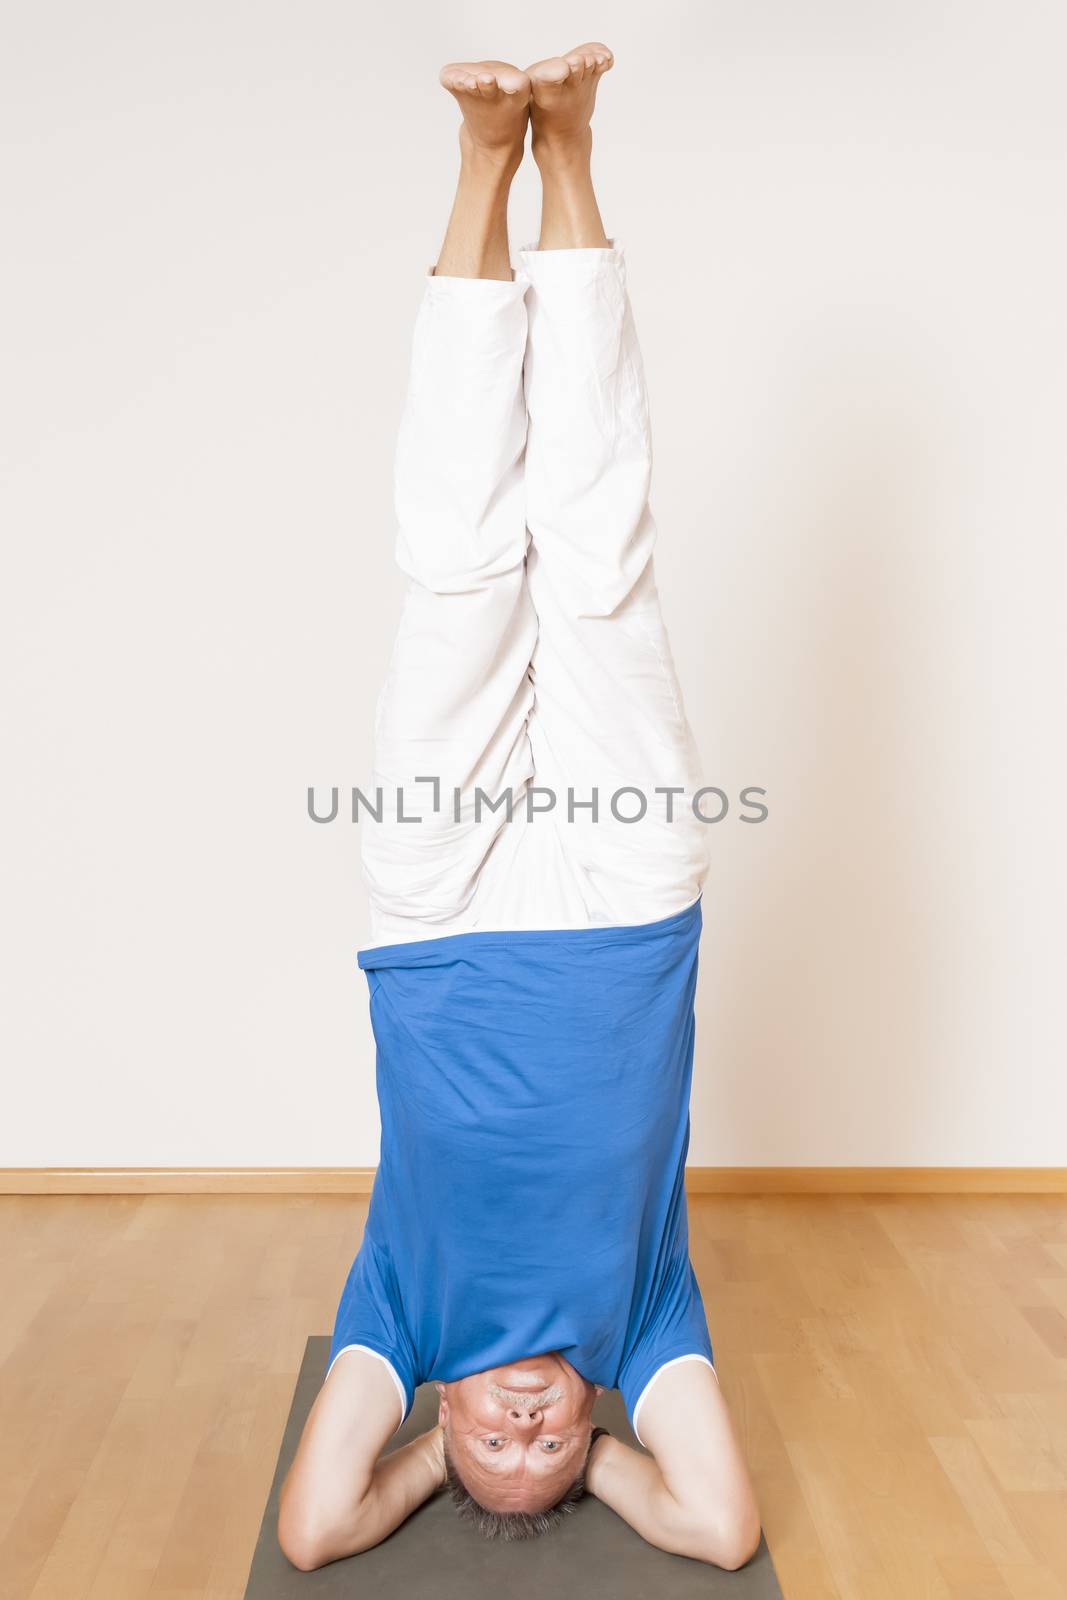 An image of a man doing yoga exercises - Salamba Shirshasana Head Stand